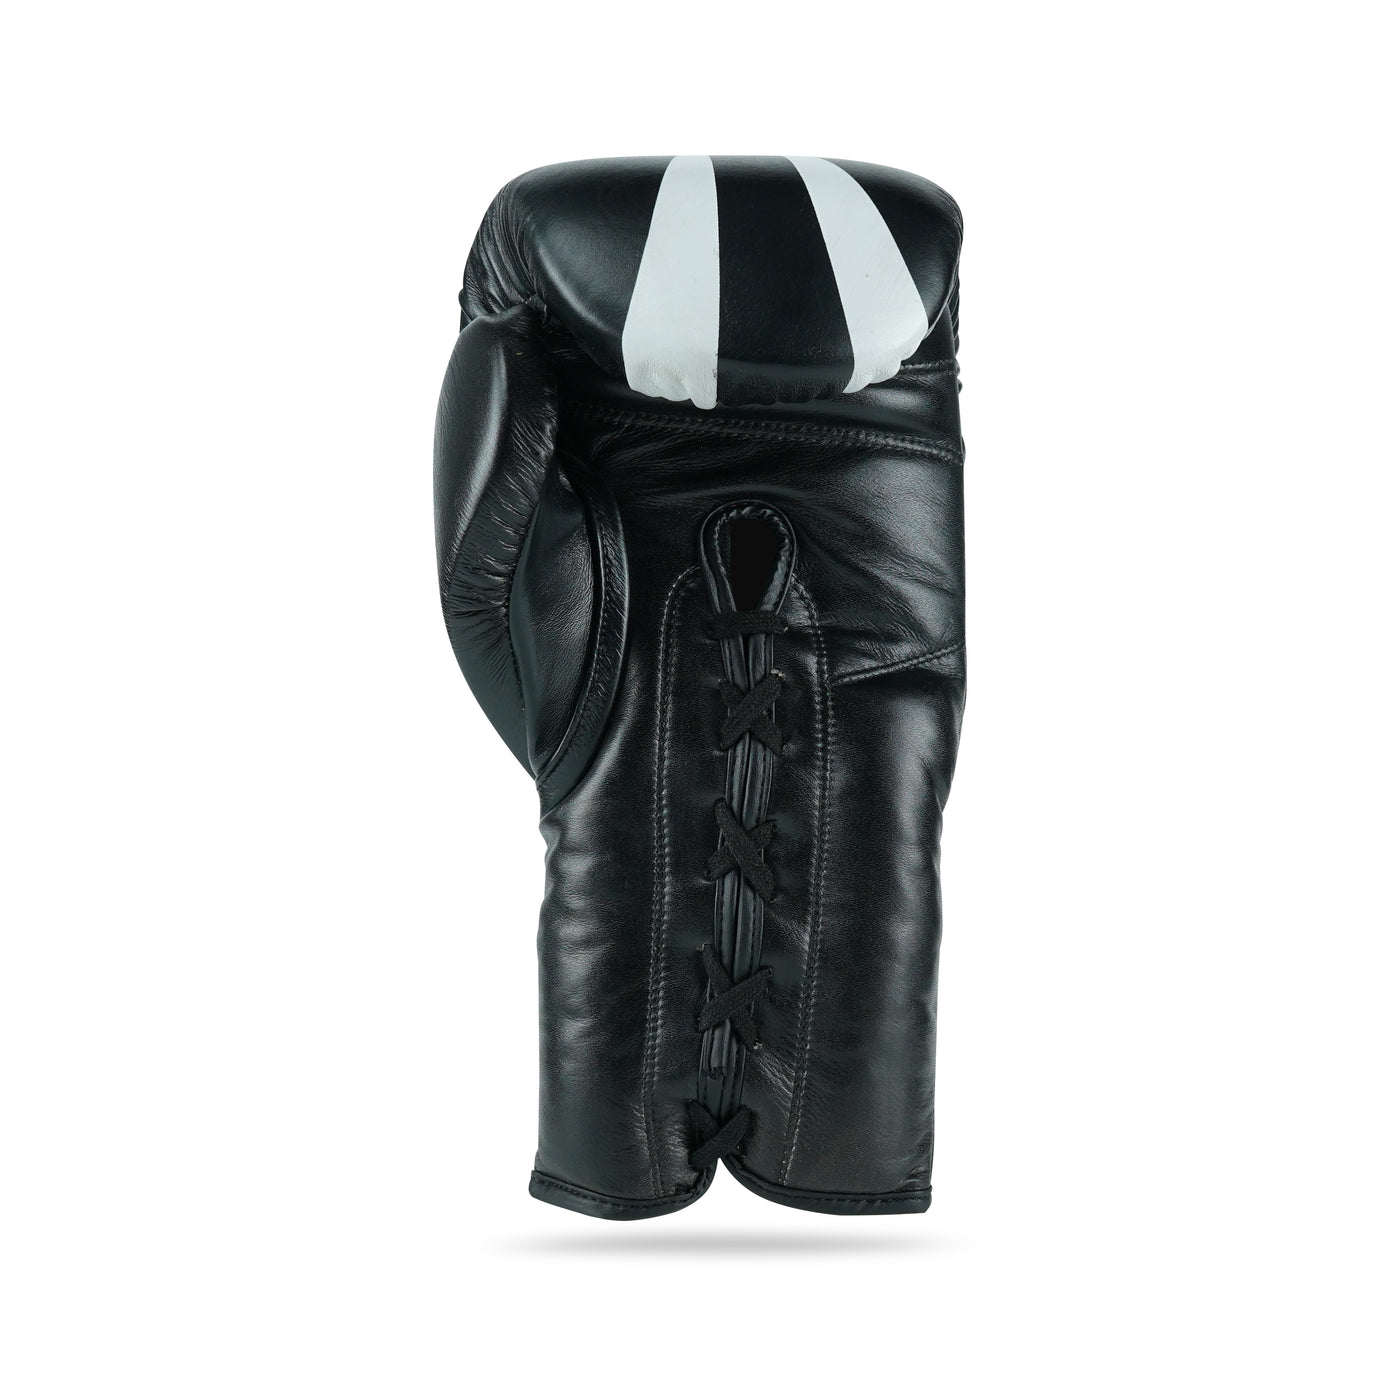 WYRM Black/White Pro Boxing Genuine Leather Gloves